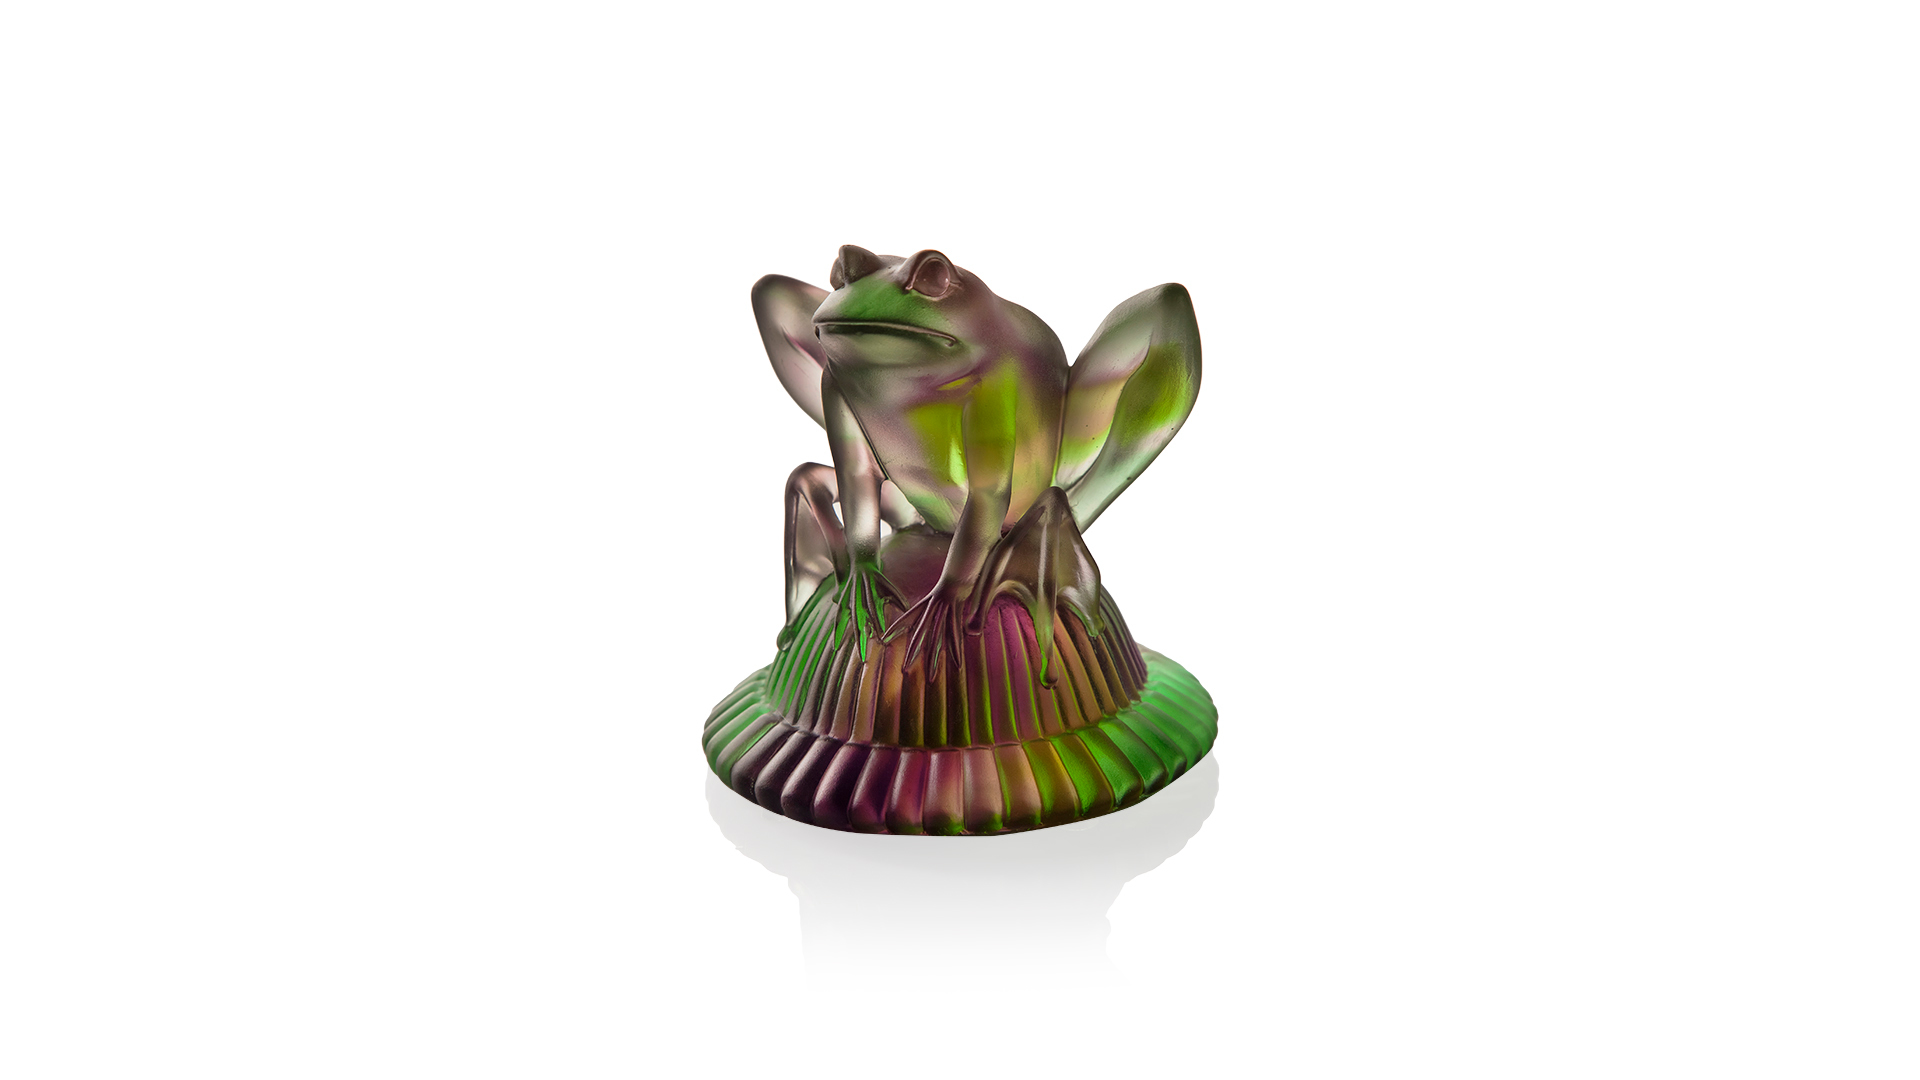 Фигурка Cristal de Paris Лягушка 13 см, пурпурно-зеленая